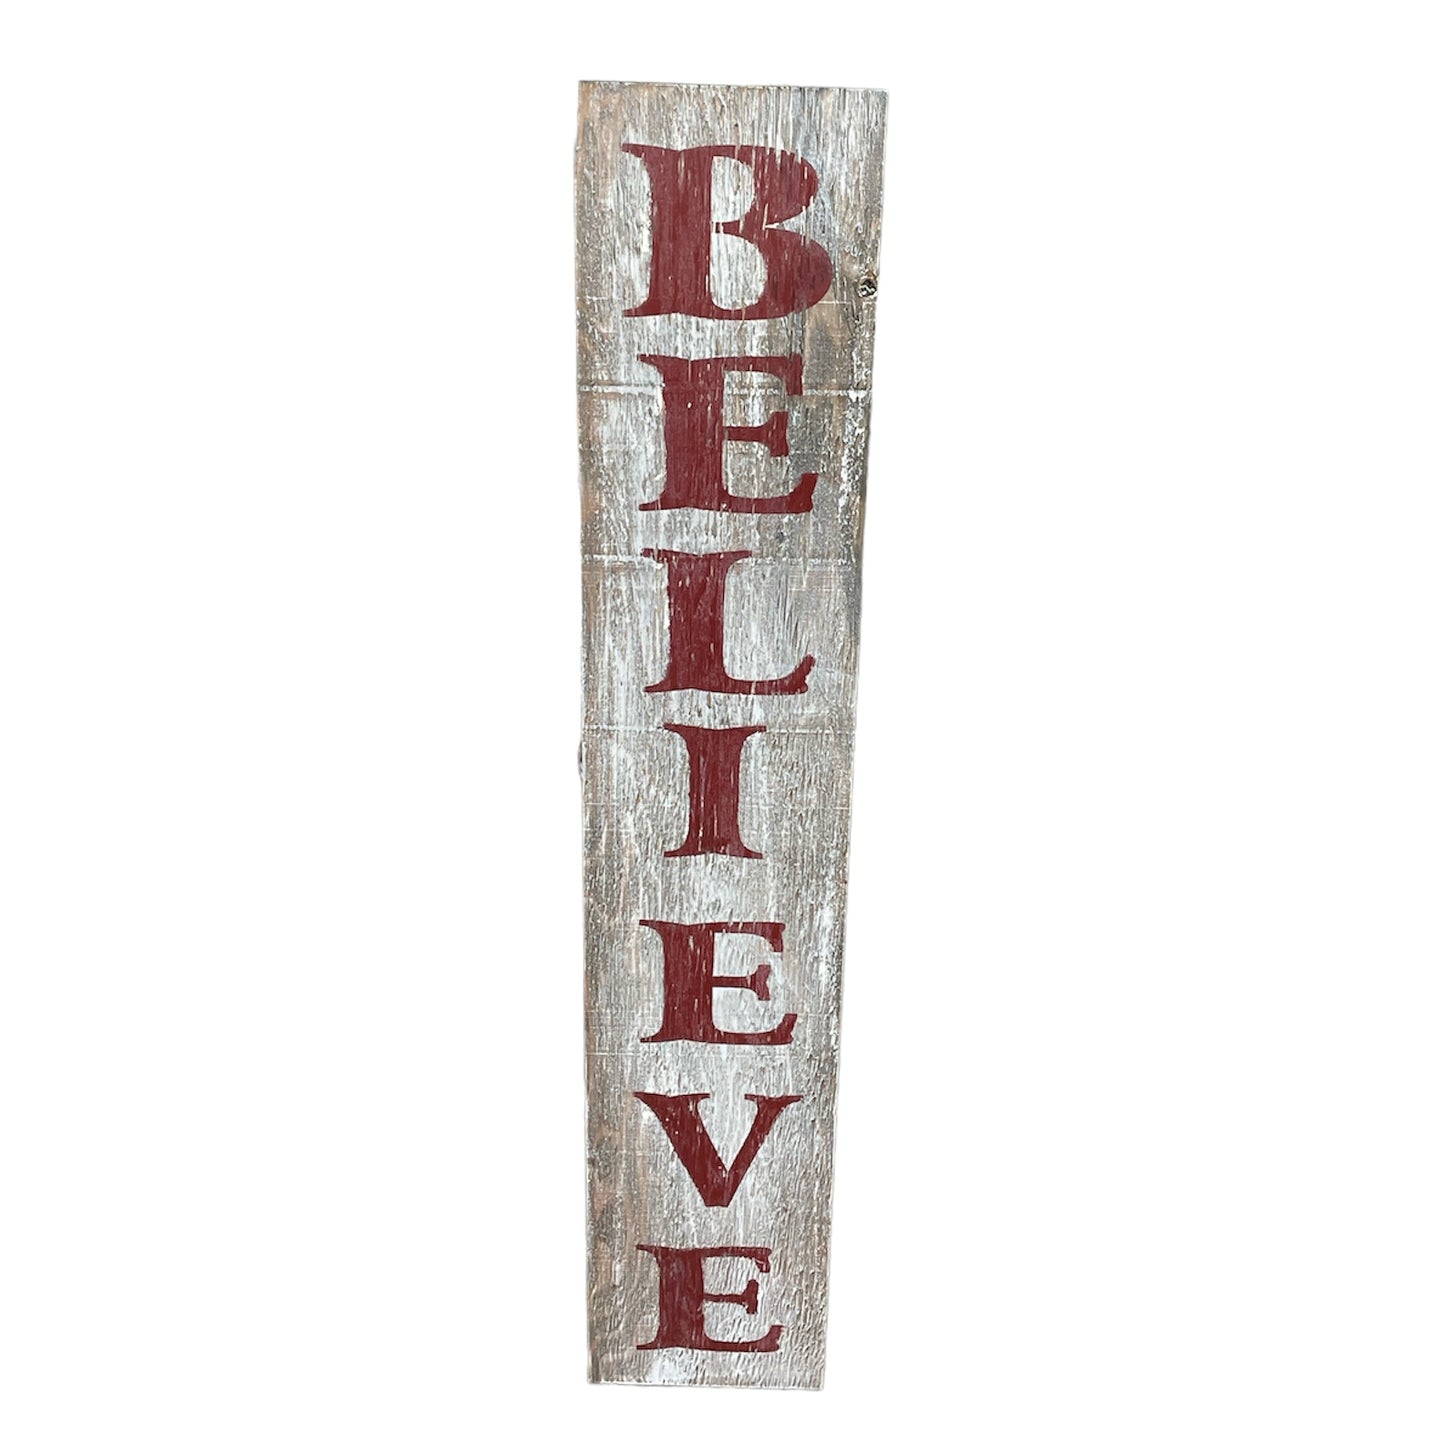 Believe Wood Sign